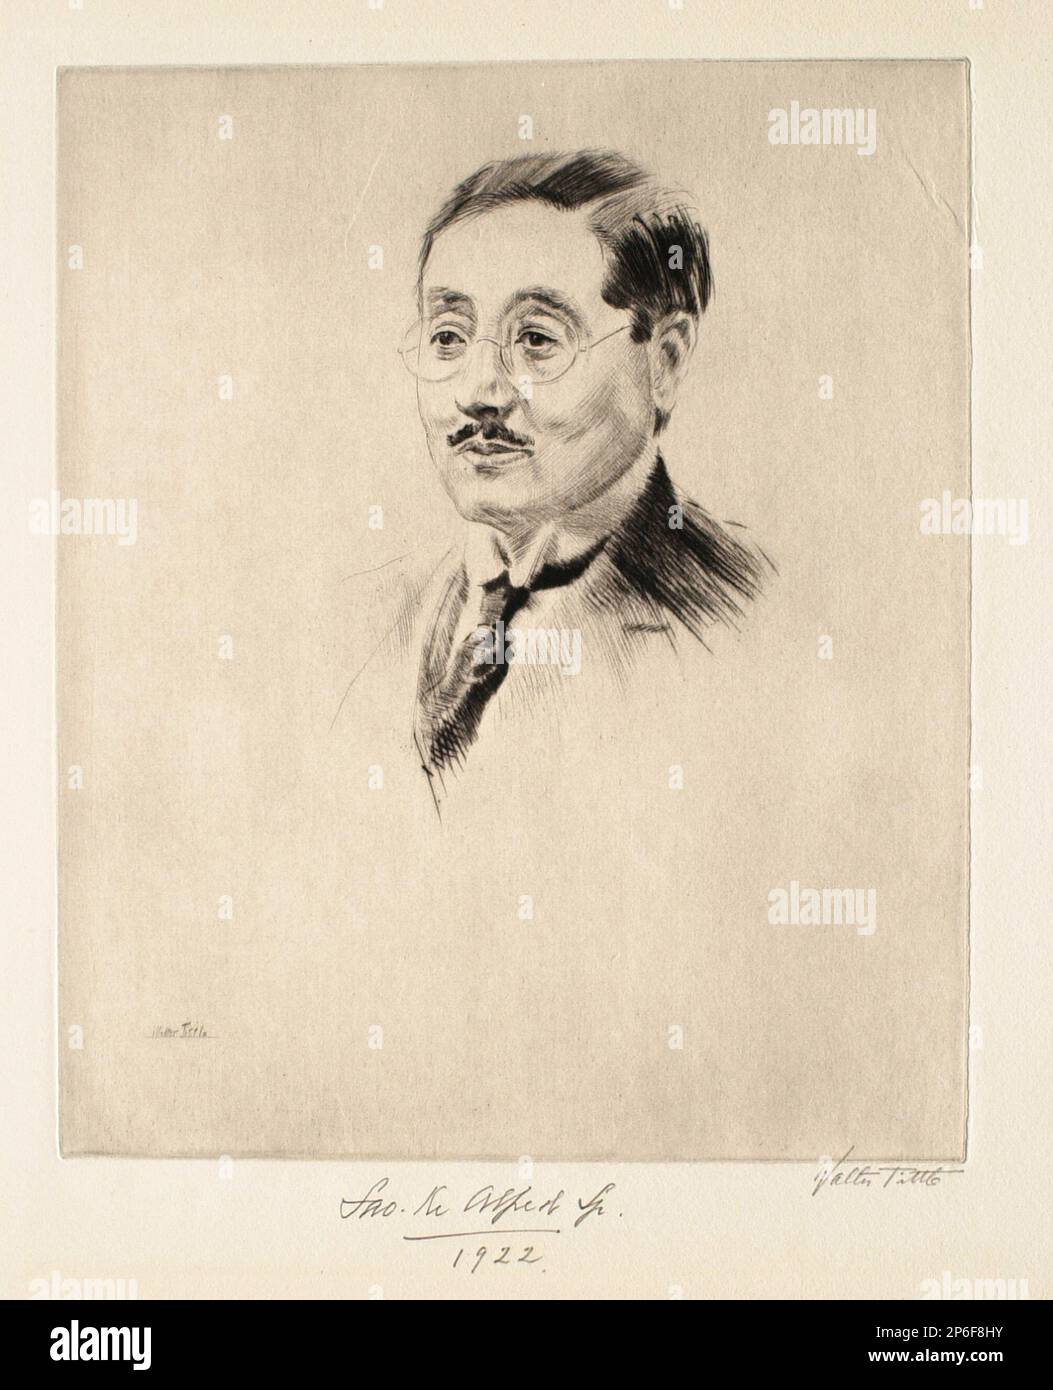 Walter Tittle, Dr. Sze, 1921-22, Trockenstelle auf gewebtem Papier. Stockfoto